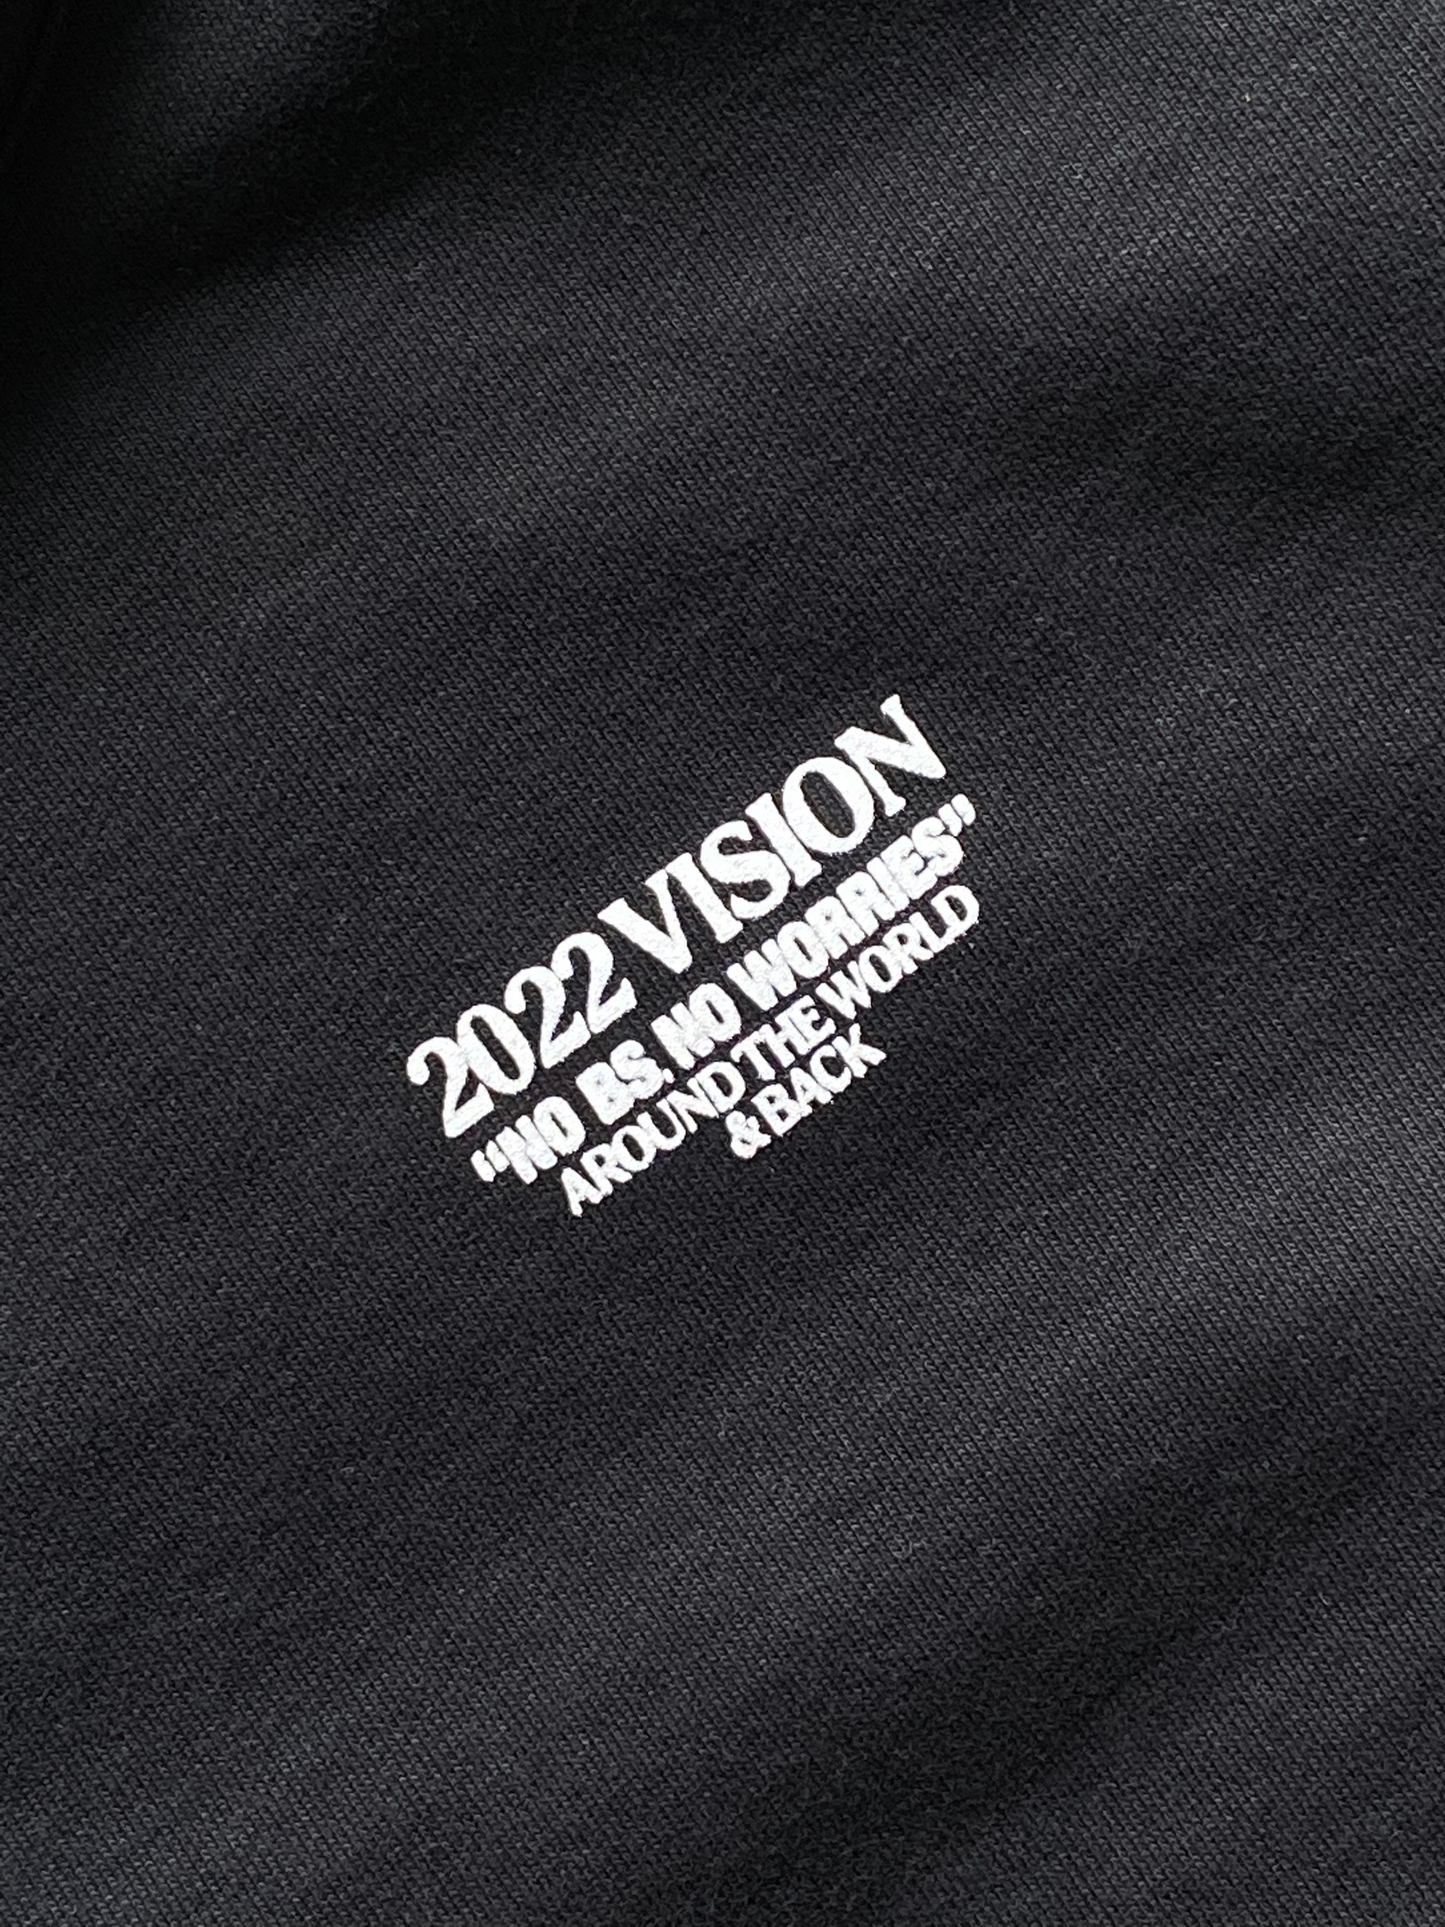 2022 Vision Tee